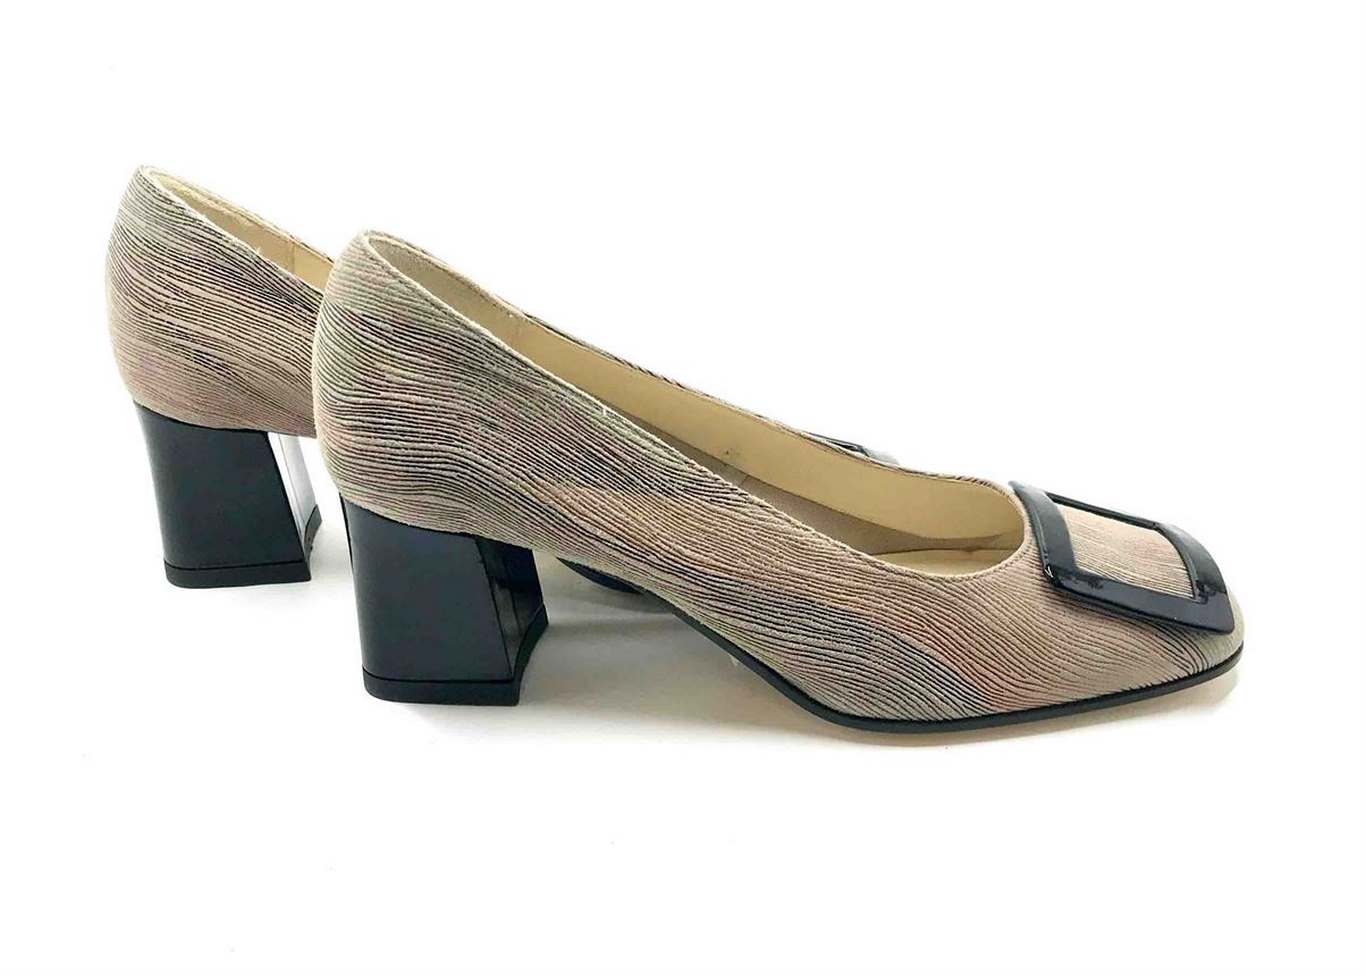 Décolleté Heel 5cm upper in Leather silkscreened Brachet Nocciola, heel and buckle in Black Patent Leather